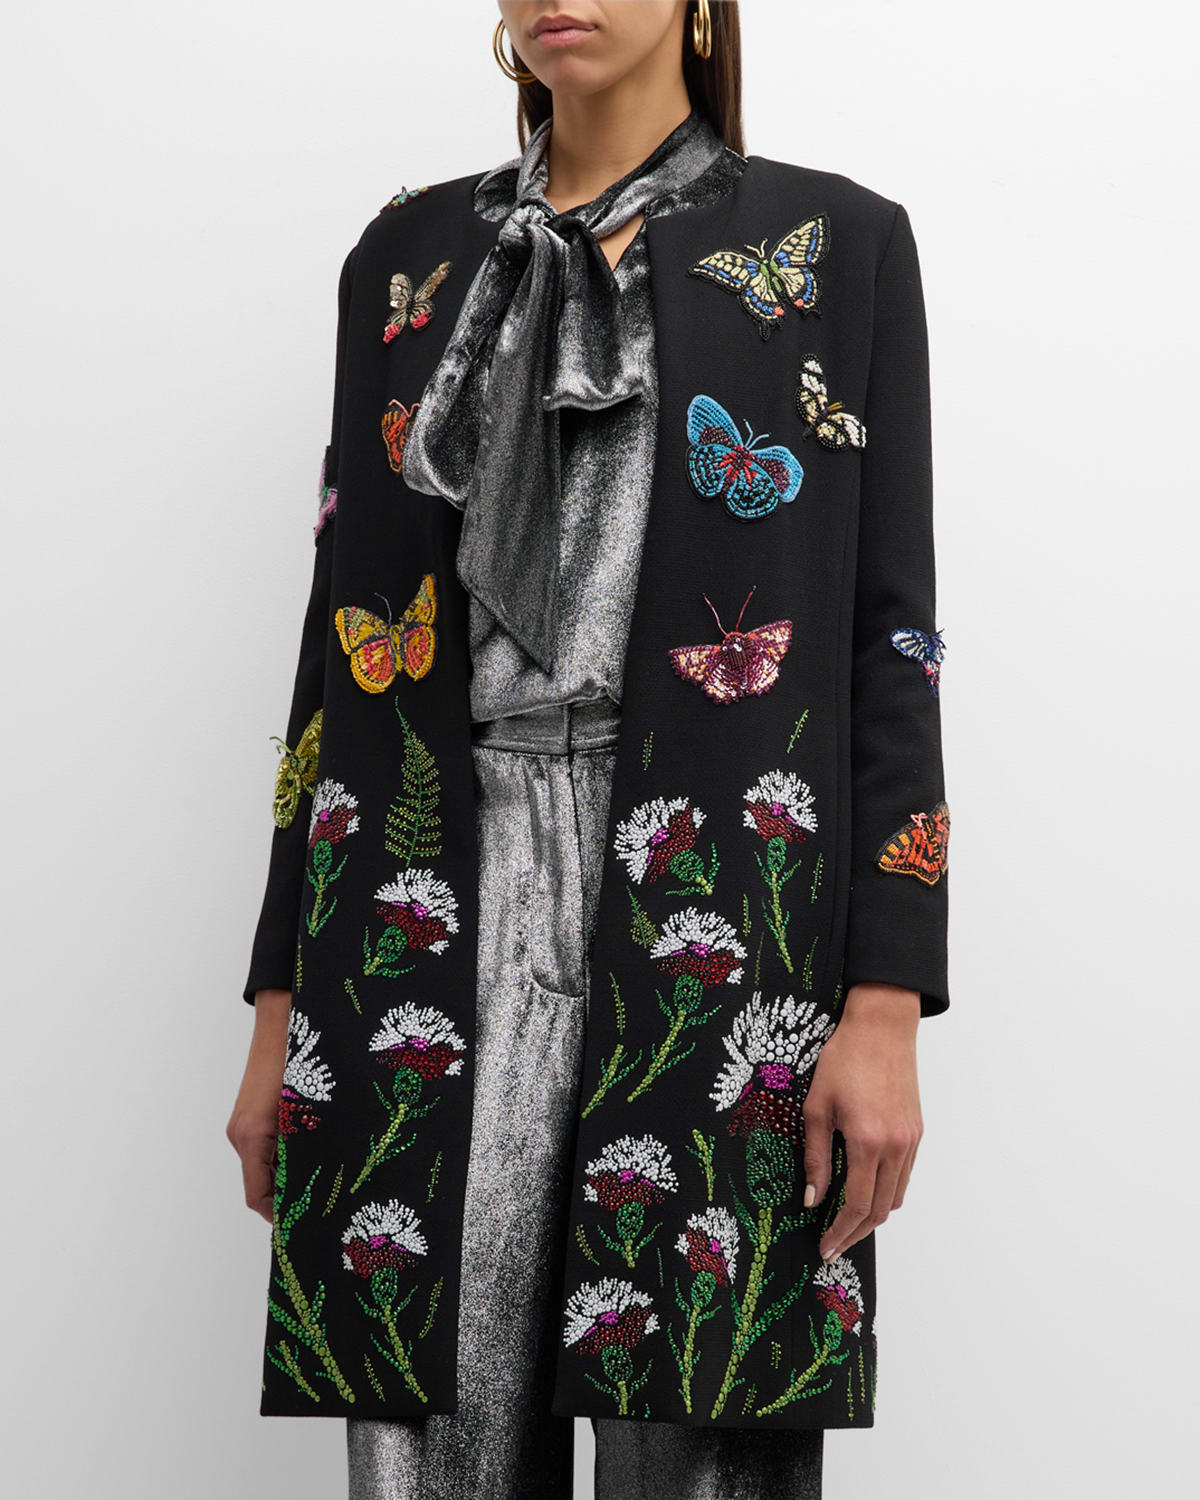 Libertine Millions Of Butterflies Classic Embellished Top Coat In Black